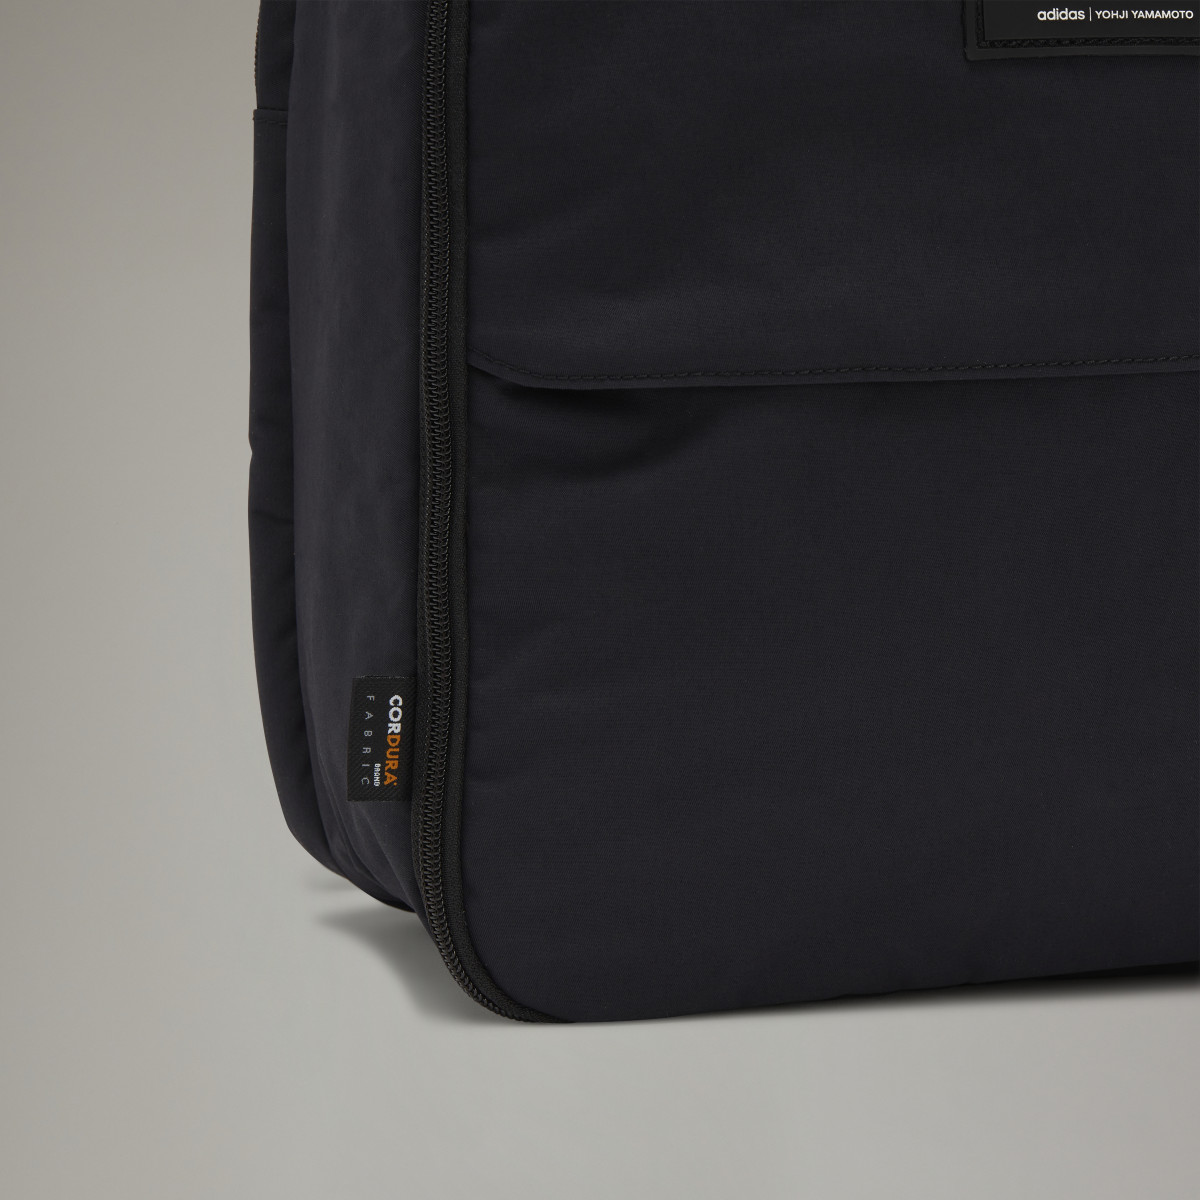 Adidas Y-3 Tech Backpack. 6